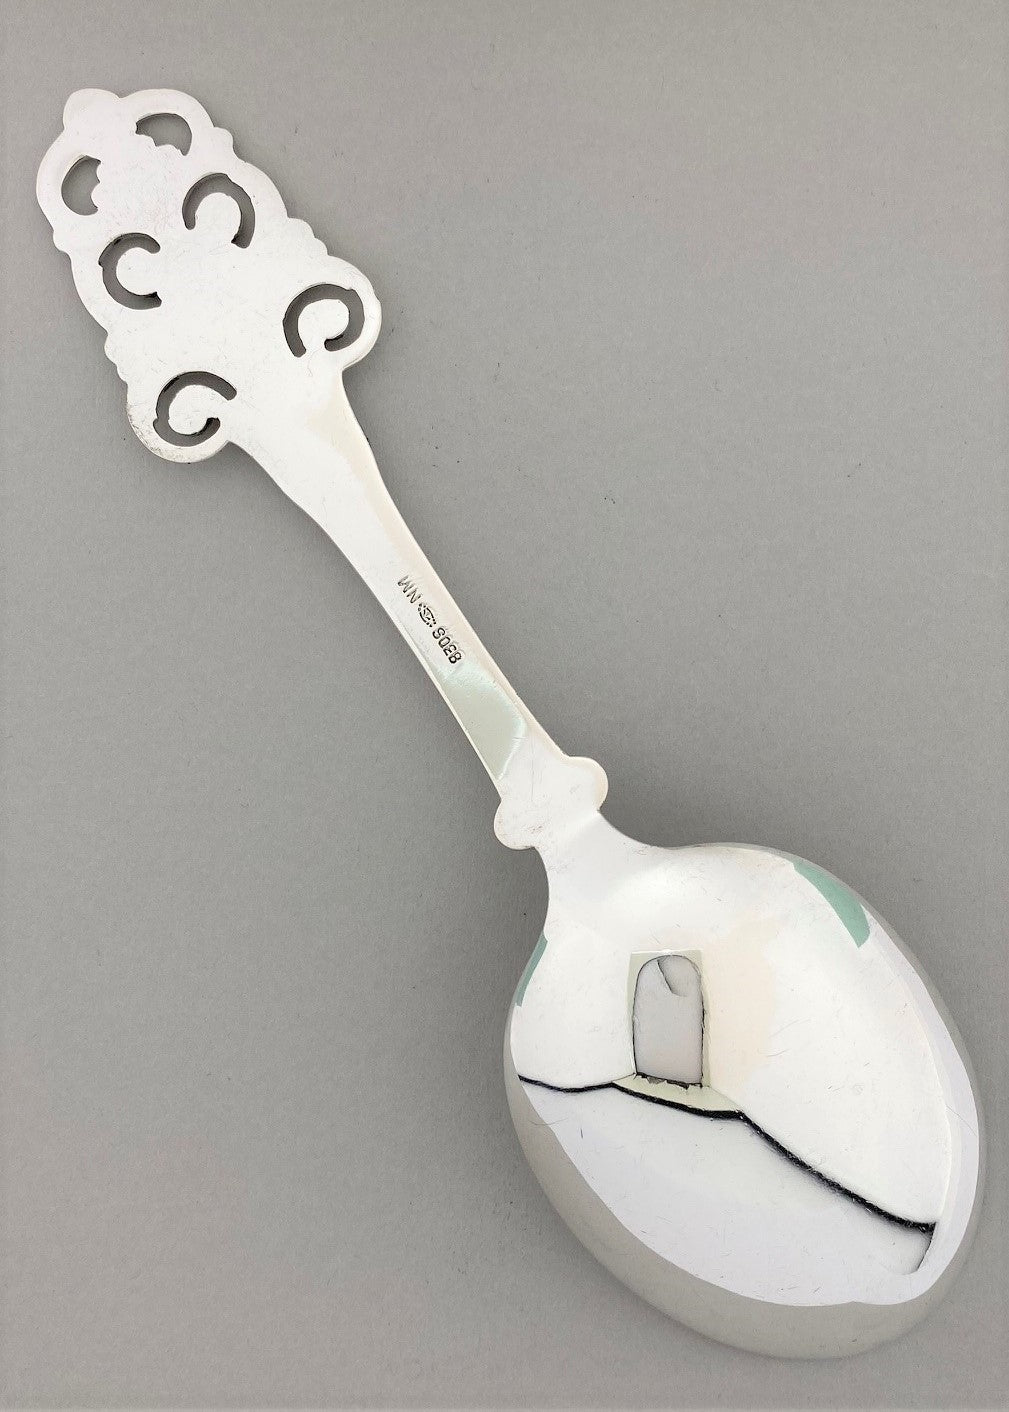 Vintage salad spoon / serving spoon in unknown pattern